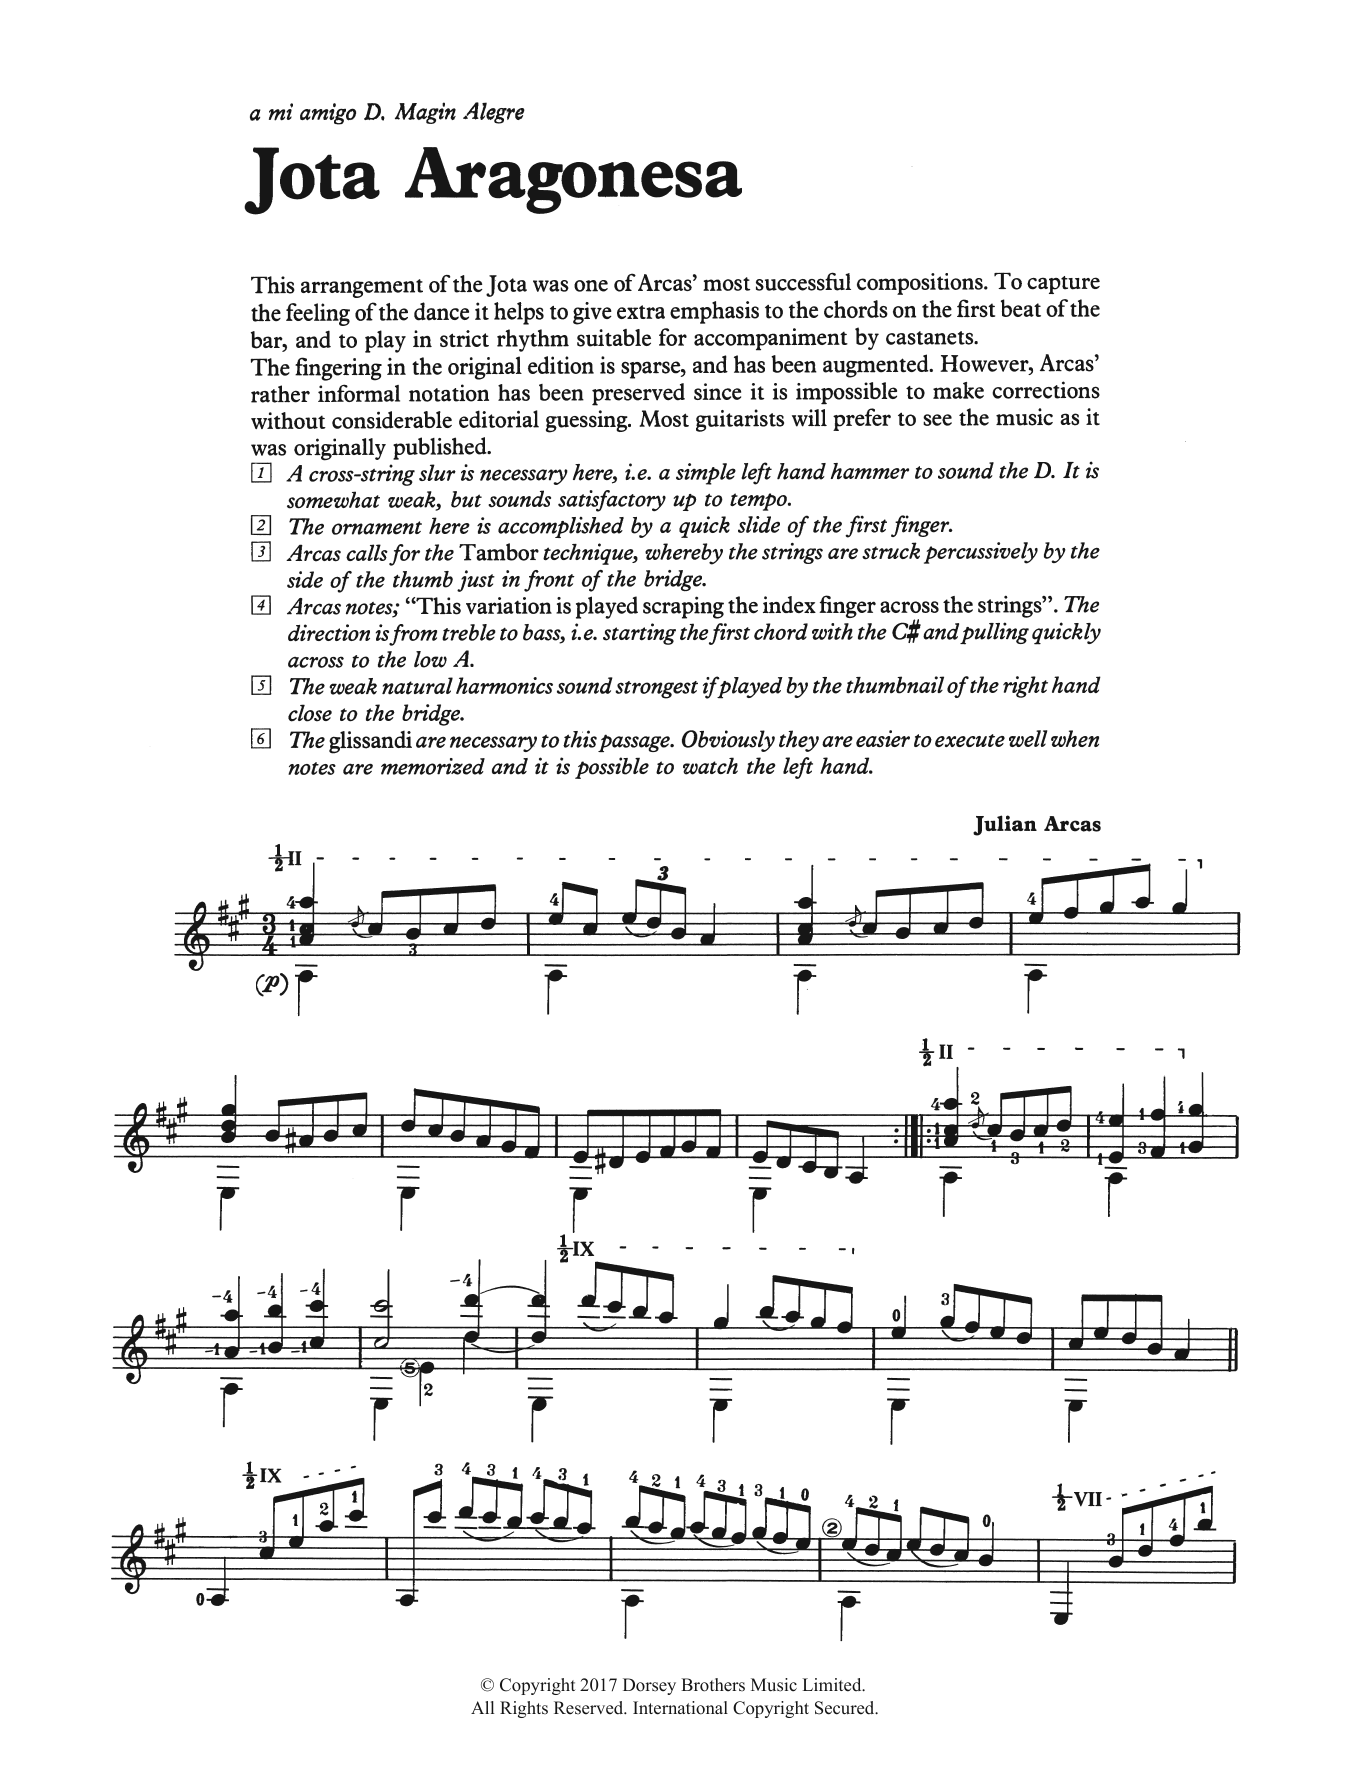 Download Julian Arcas Jota Aragonesa Sheet Music and learn how to play Guitar PDF digital score in minutes